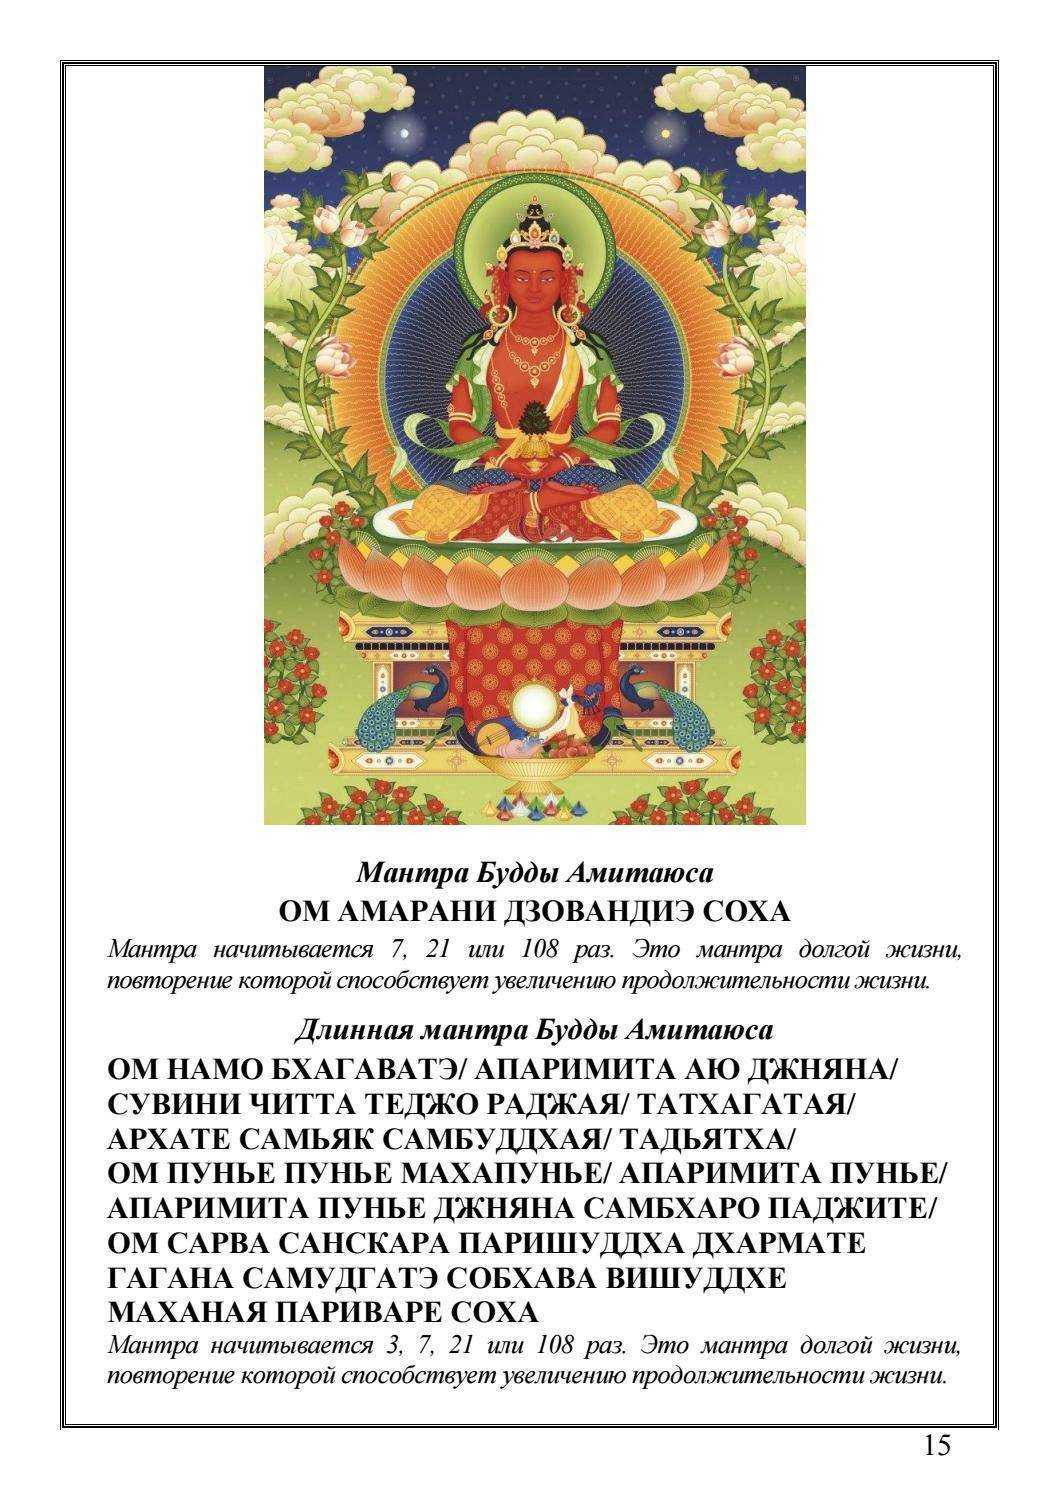 Код на будду. Мантра Будды Амитаюса. Будда Амитаюс мантра текст. Тибетский буддизм мантры Будда медицины. Мантра Будды медицины на тибетском.